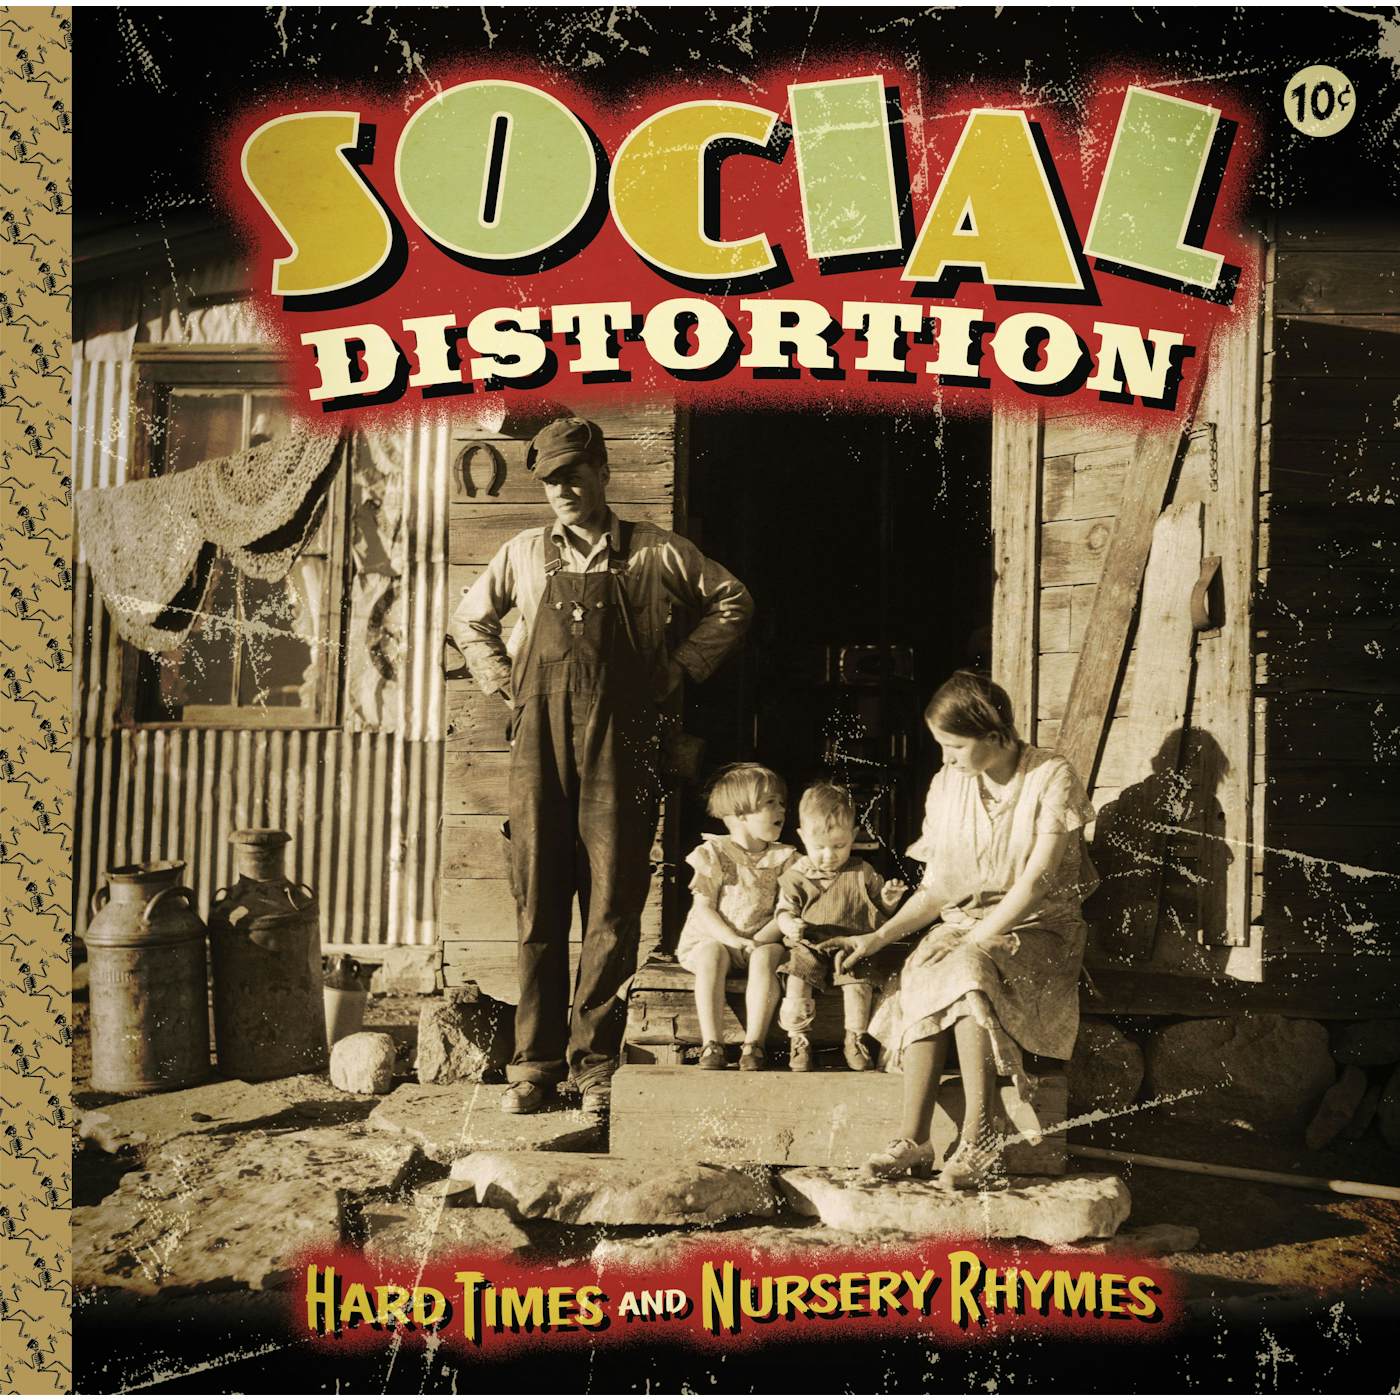 Social Distortion HARD TIMES & NURSERY RHYMES CD